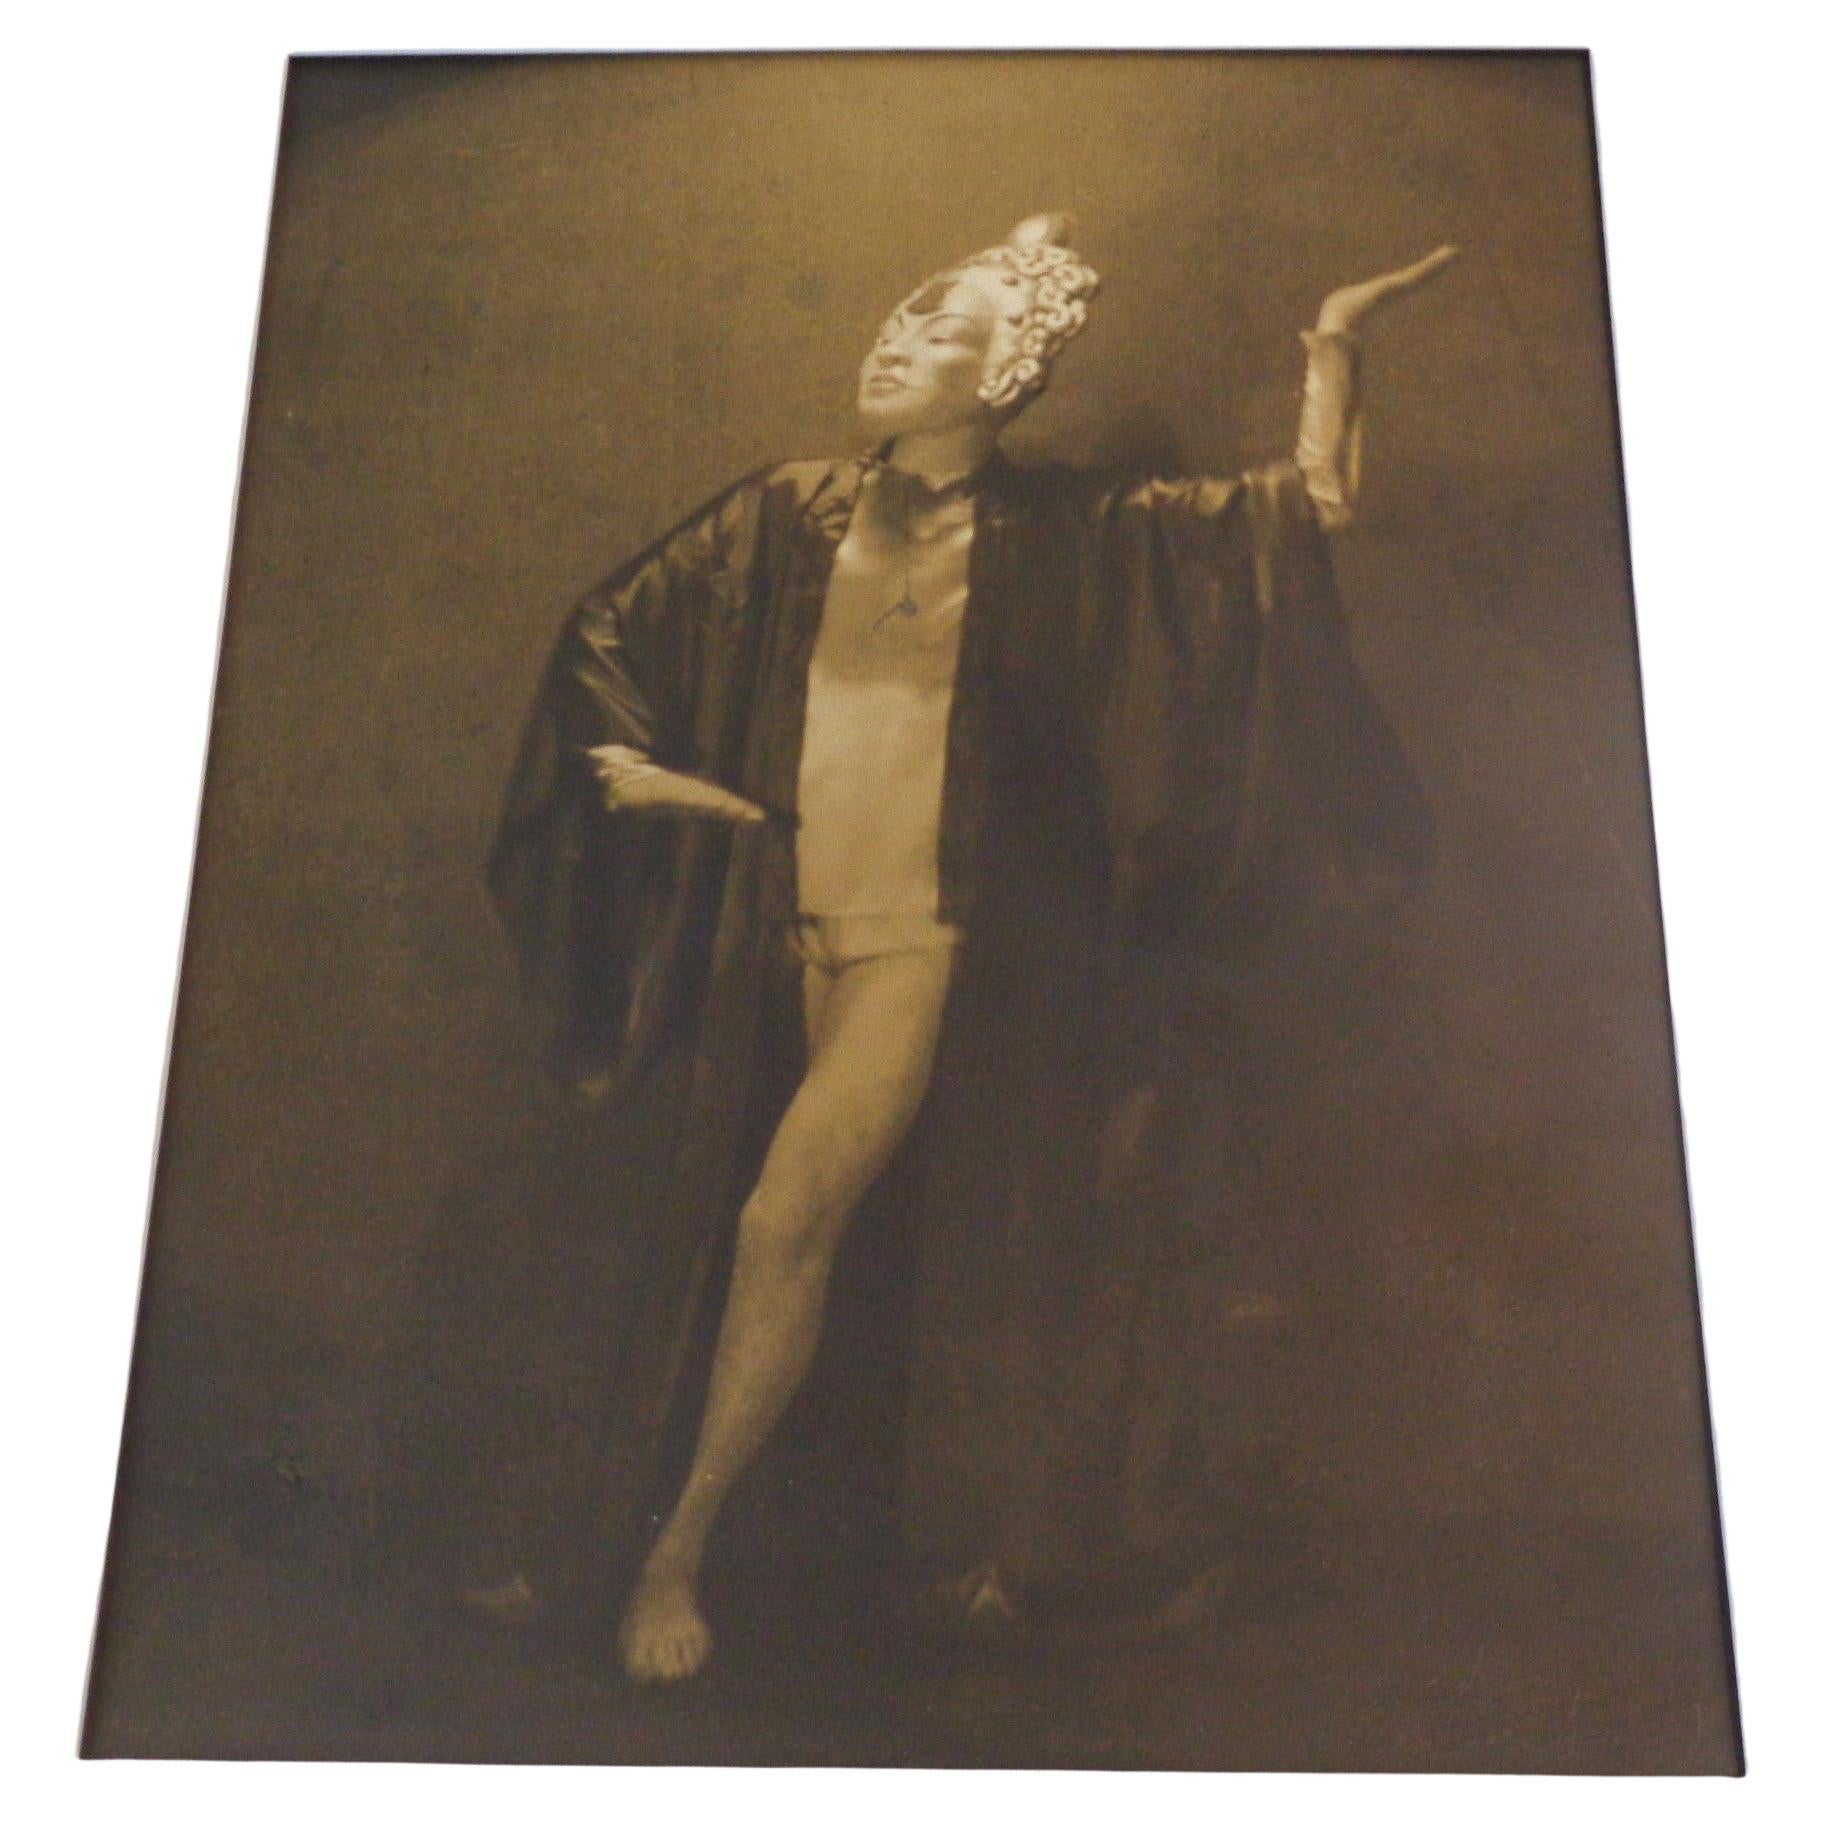 Original Pictorialist Sepia Tone Gelatin Silver Print Photograph Exotic Dancer For Sale